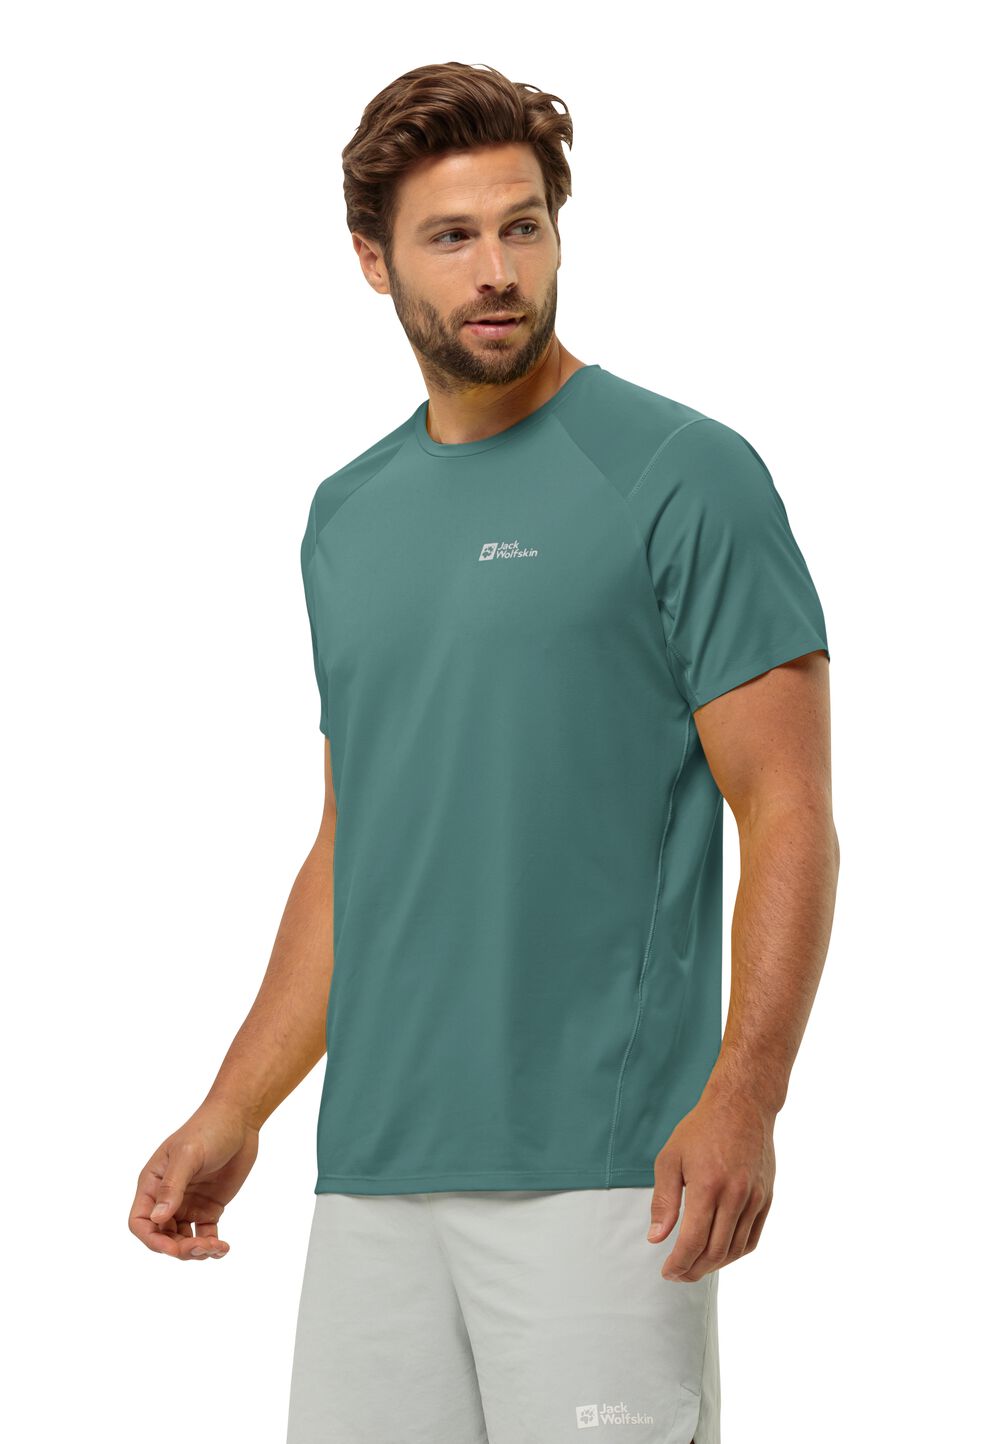 Jack Wolfskin Prelight Chill T-Shirt Men Functioneel shirt Heren M jade green jade green